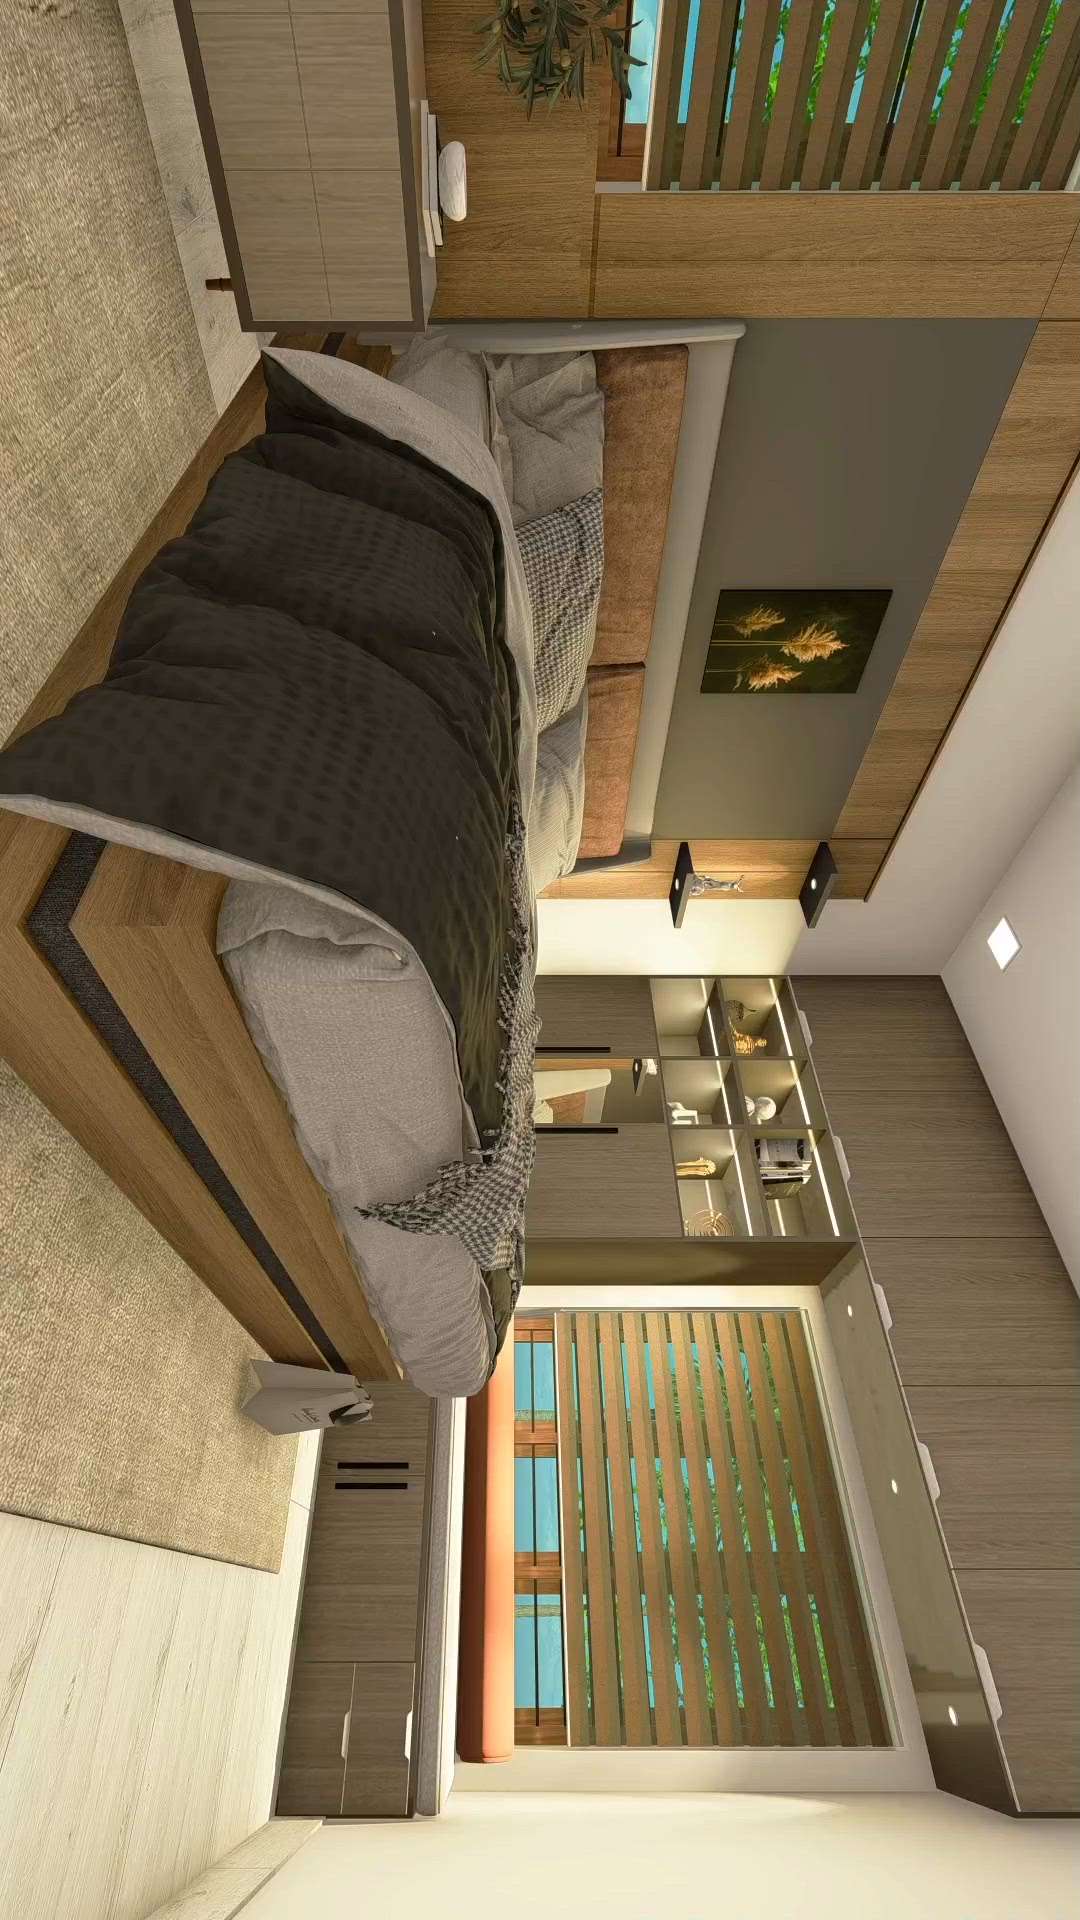 #BedroomDesigns #MasterBedroom #InteriorDesigner #kerala #WardrobeIdeas #WindowBlinds #bed #sidetable